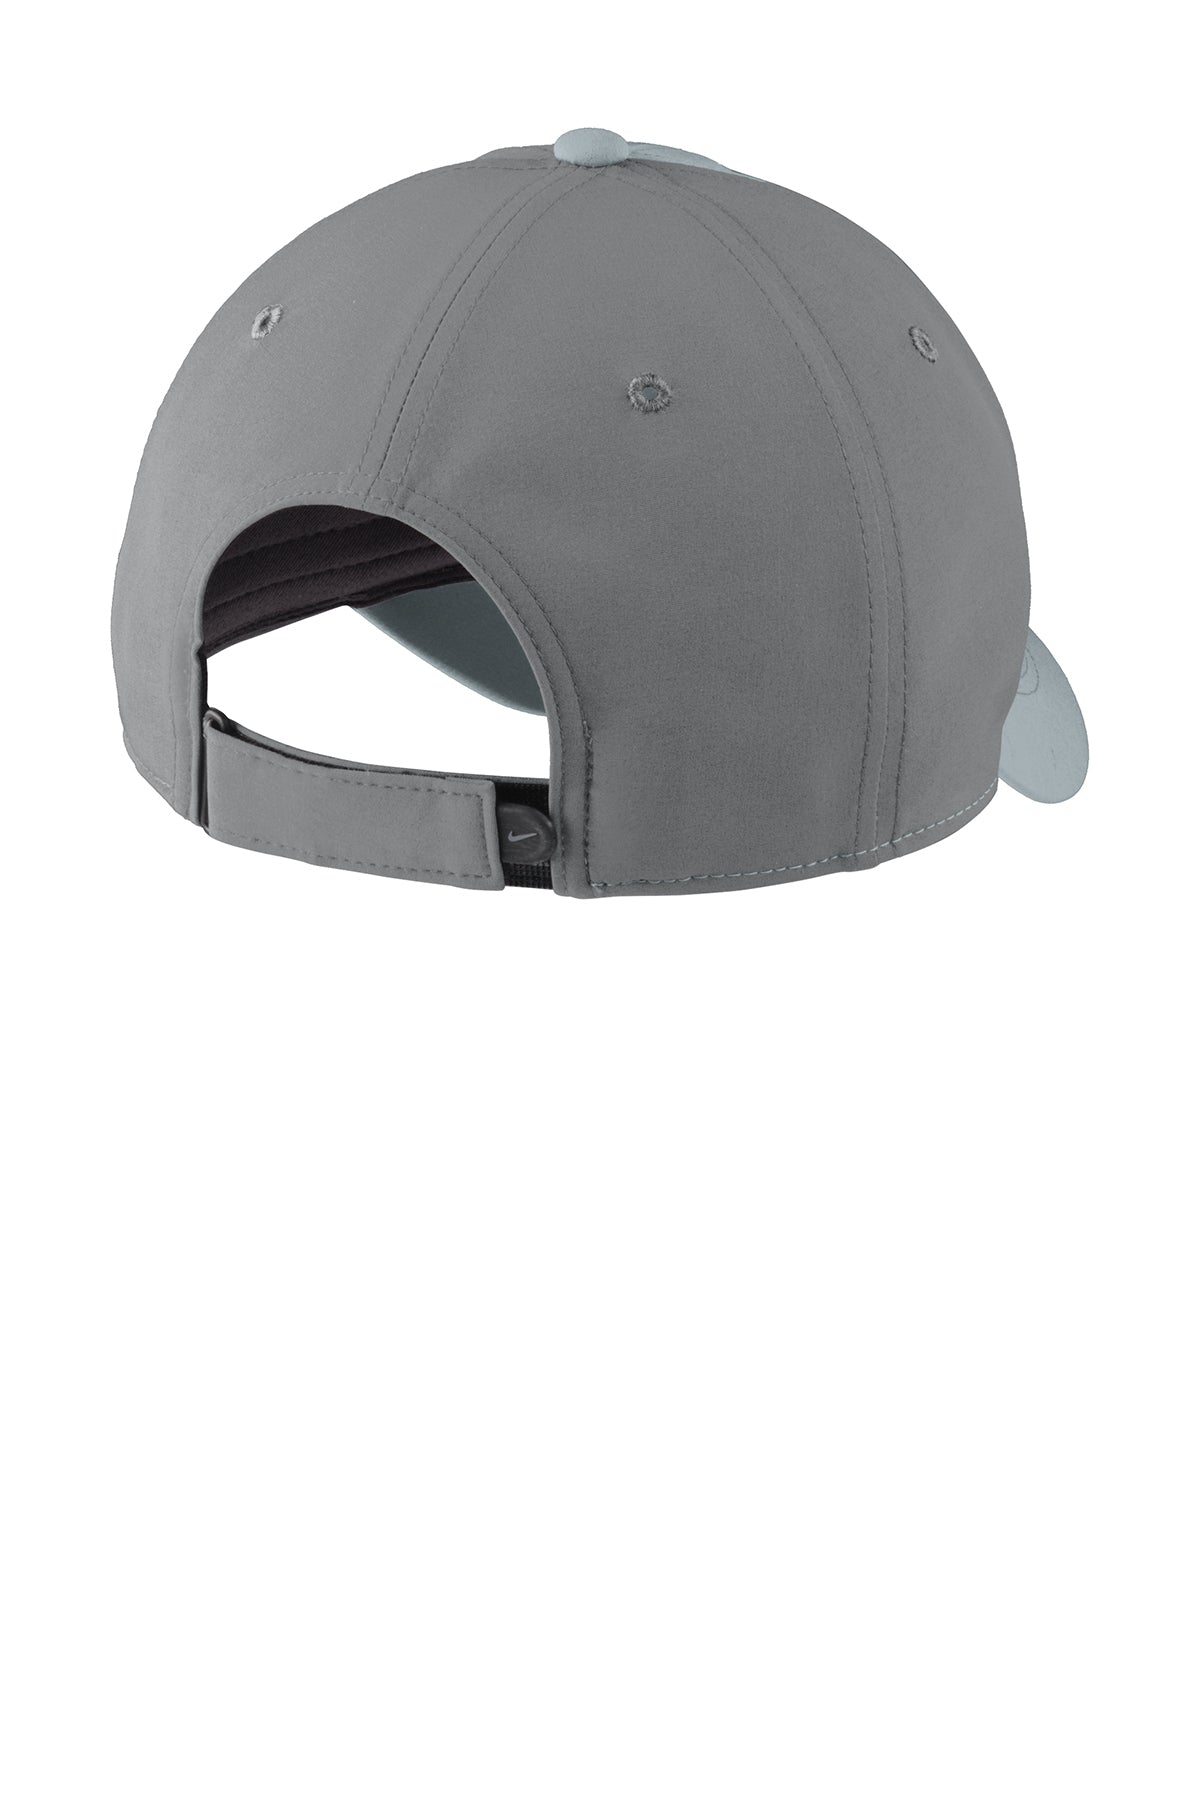 Nike Dri-FIT Legacy Customized Caps, Cool Grey